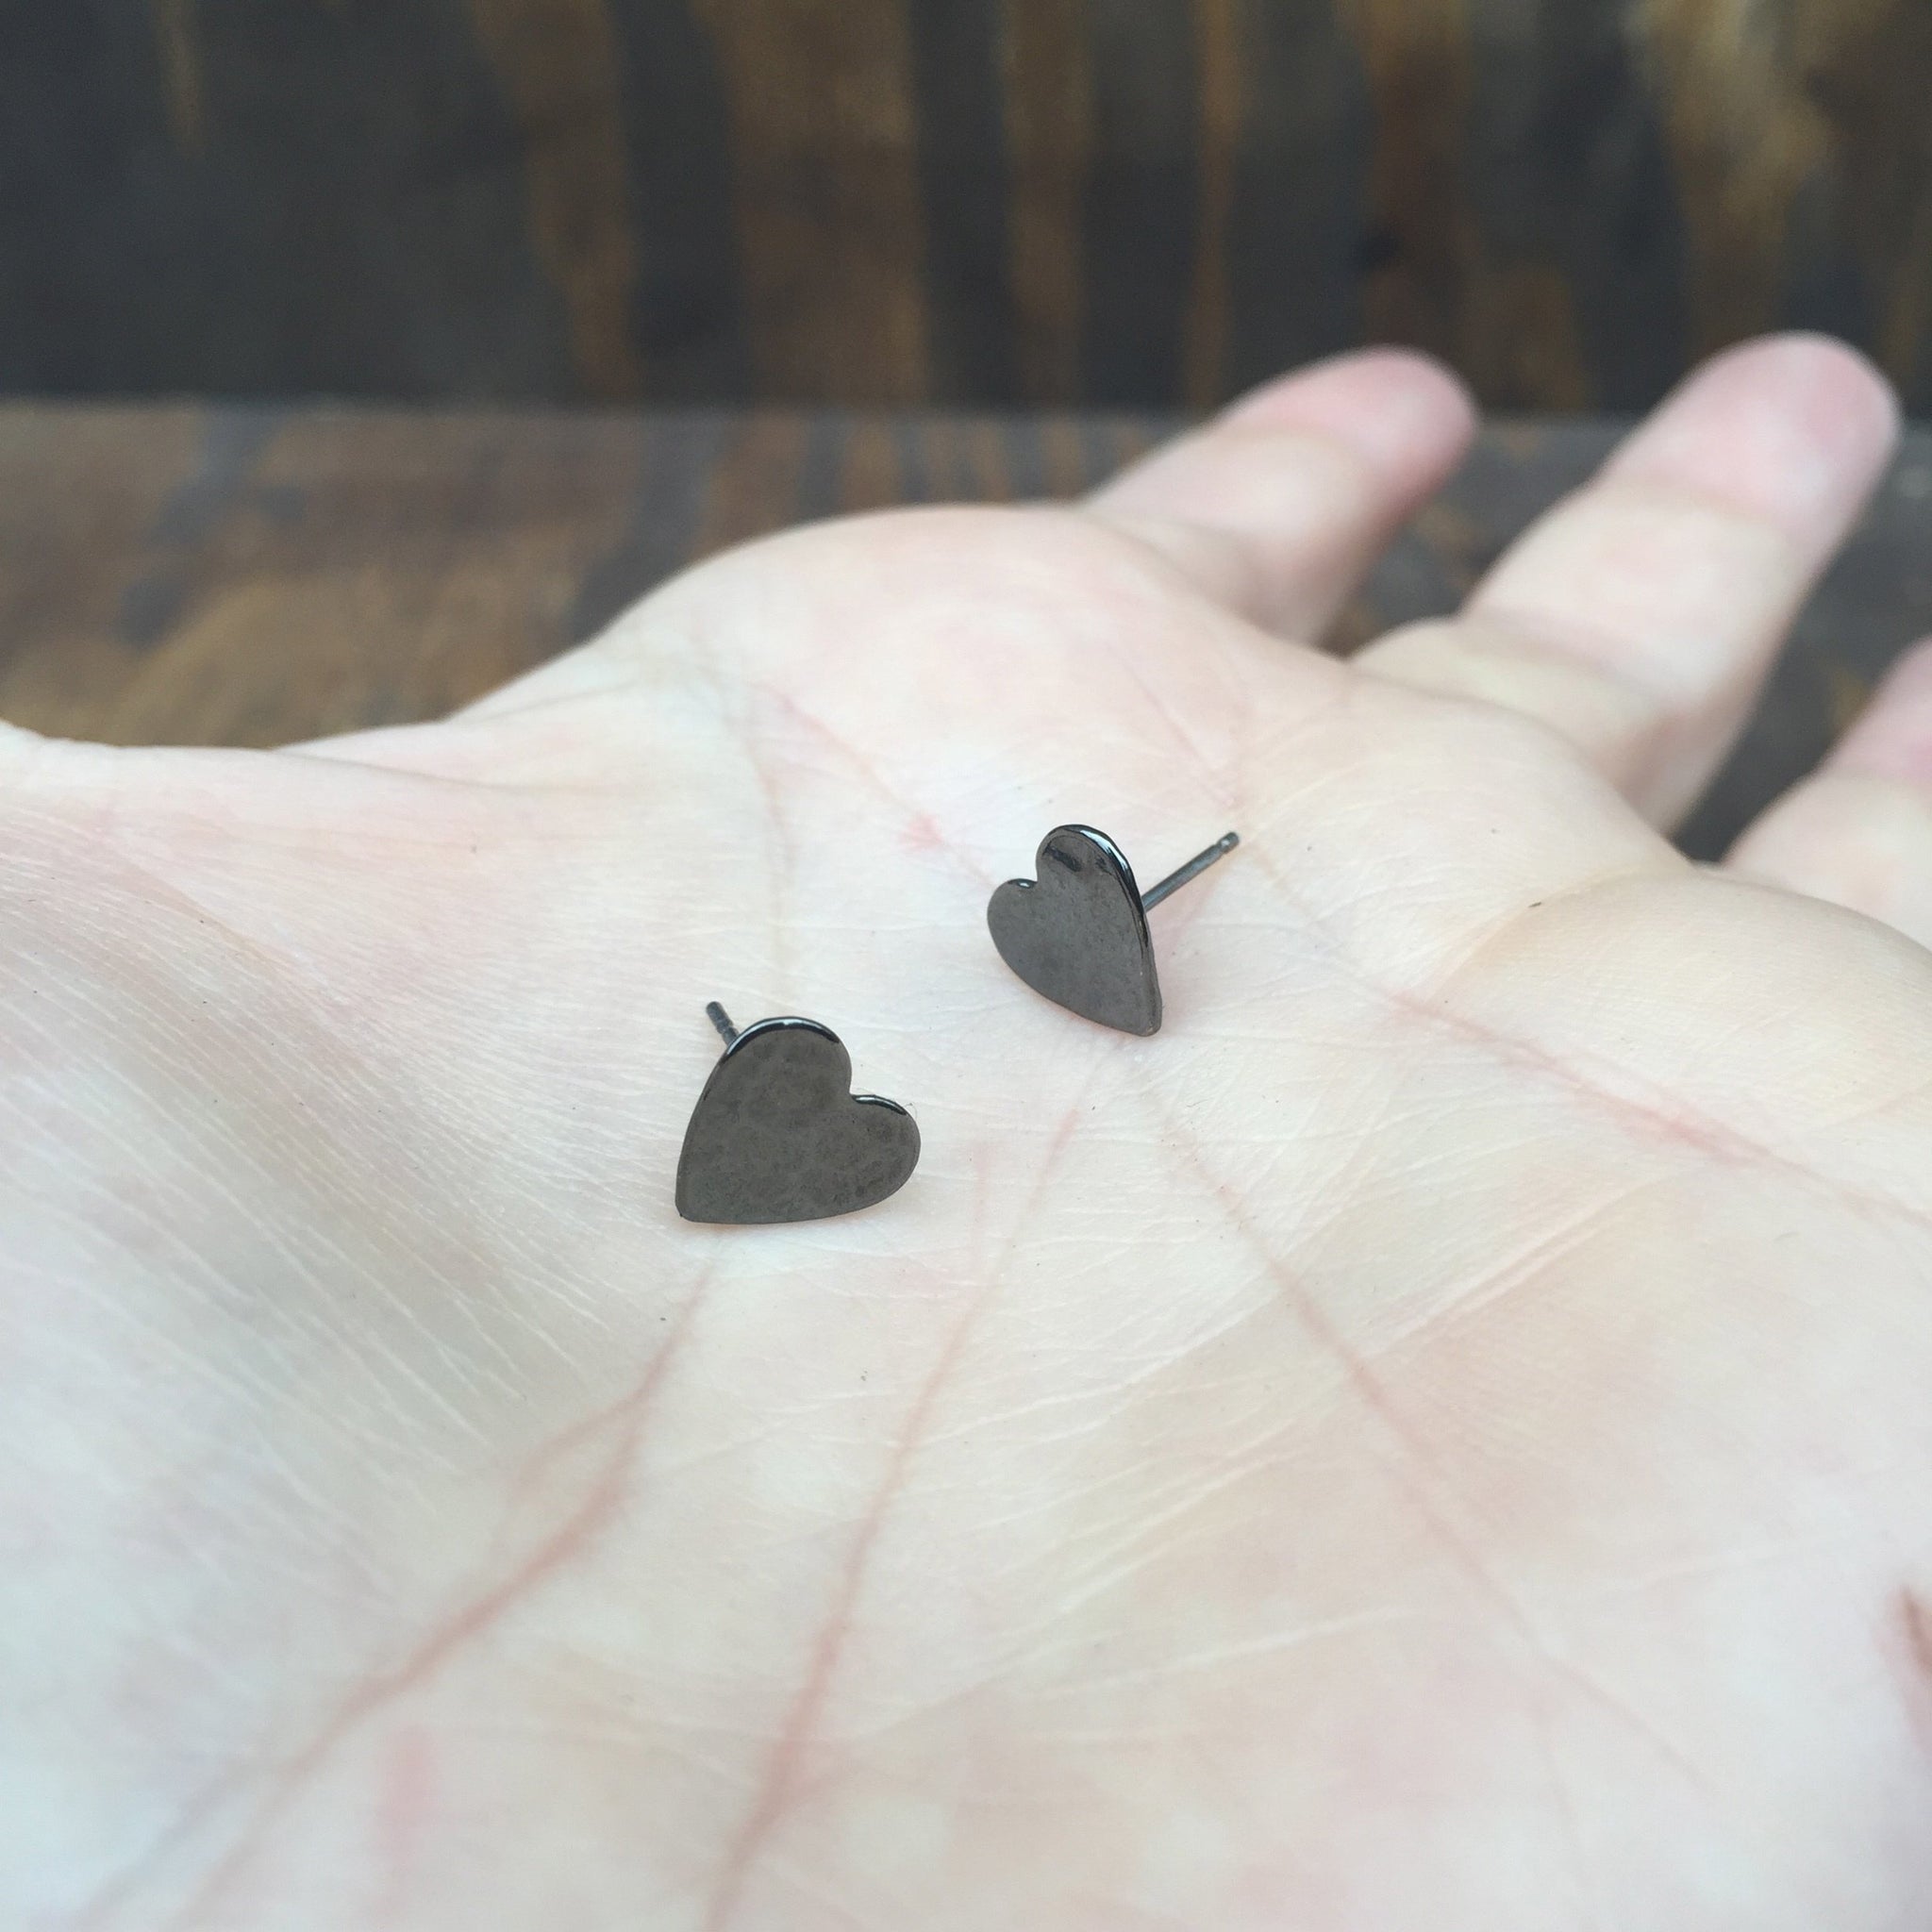 Hammered Heart Earrings